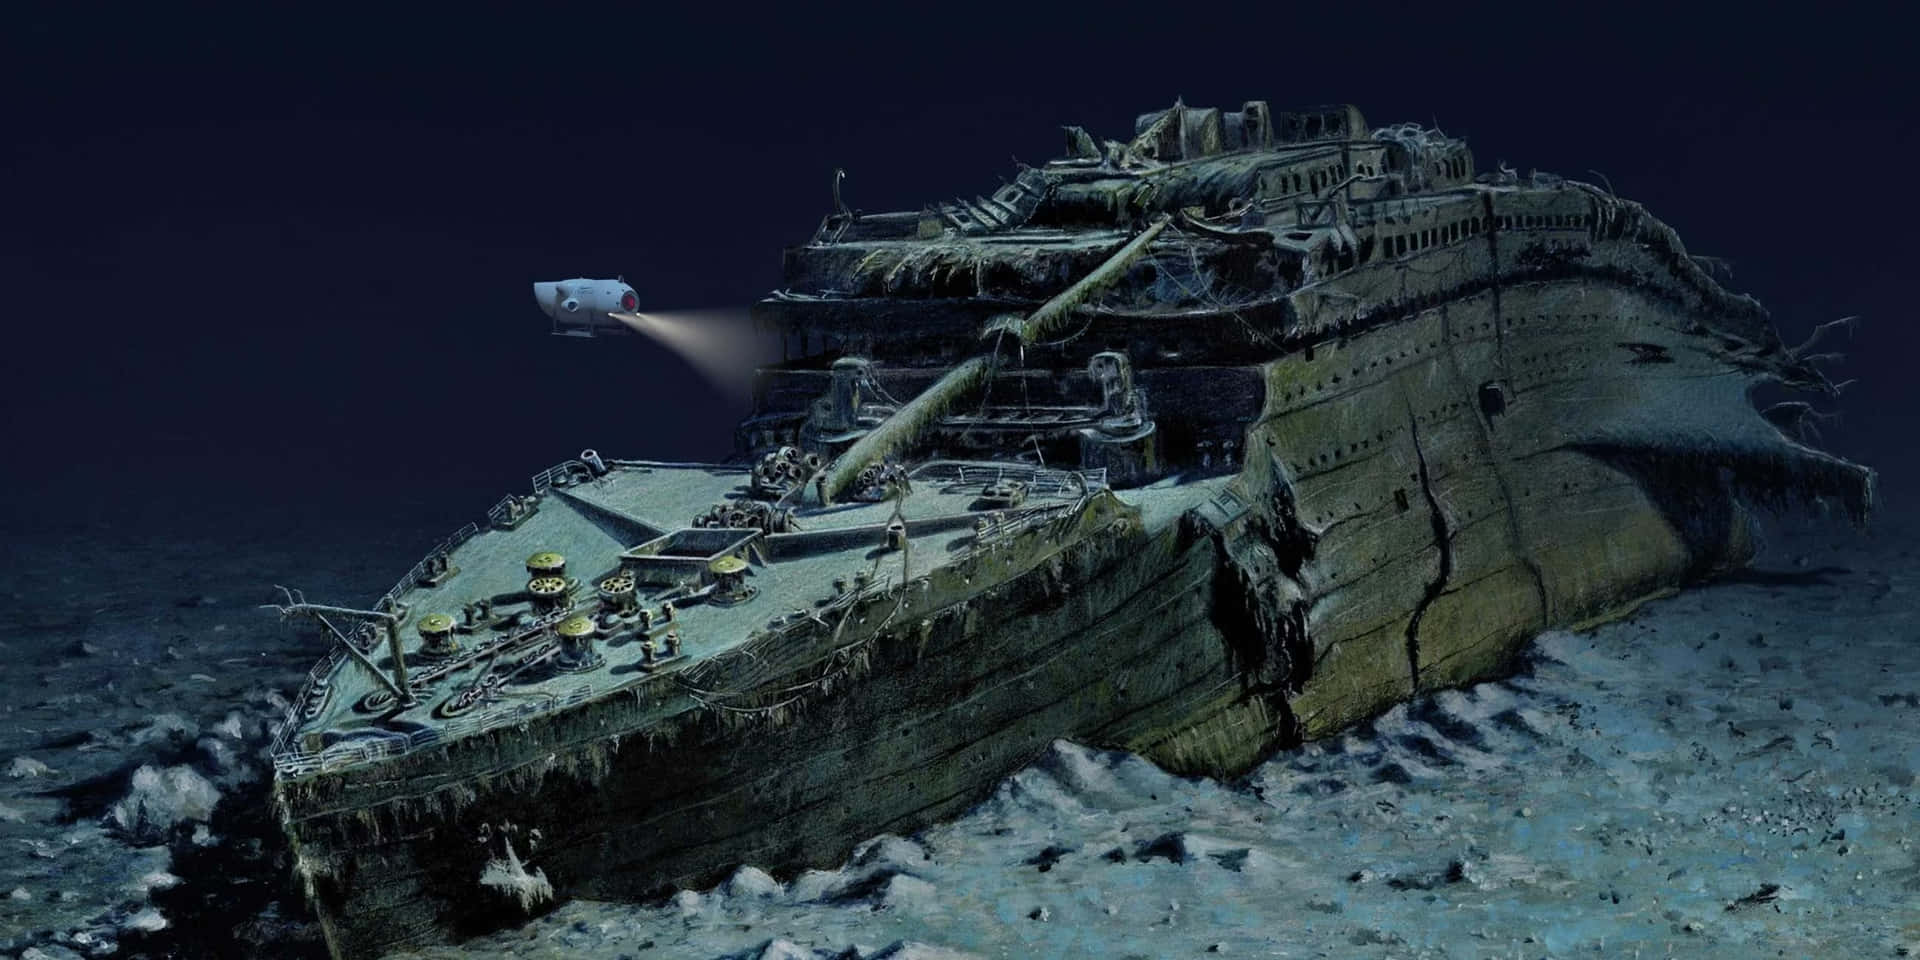 Imágenes Del Titanic Bajo El Agua